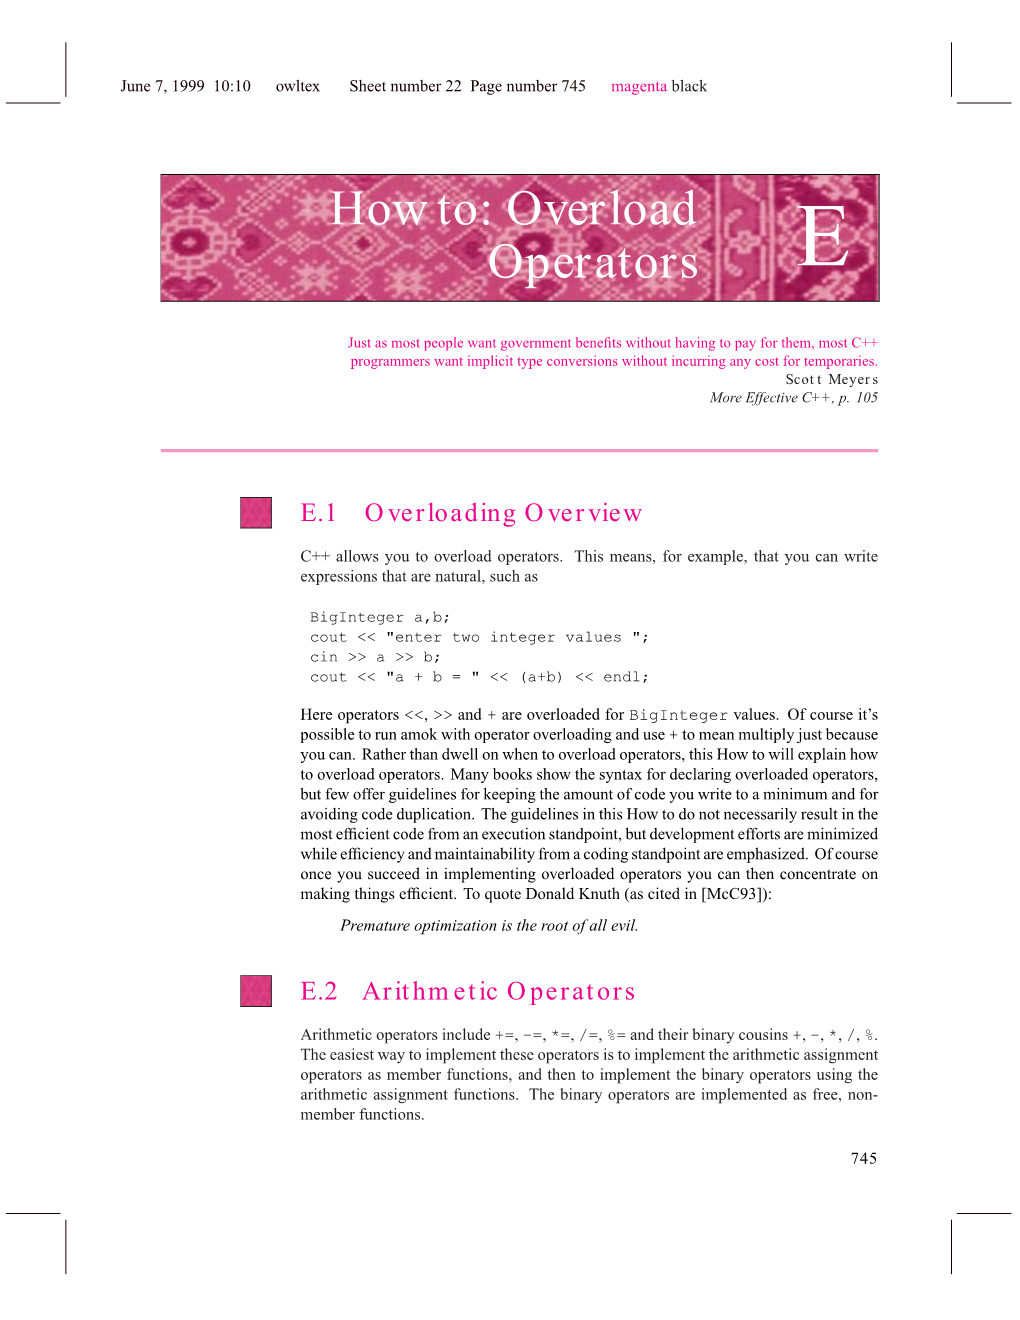 How To: Overload Operators E